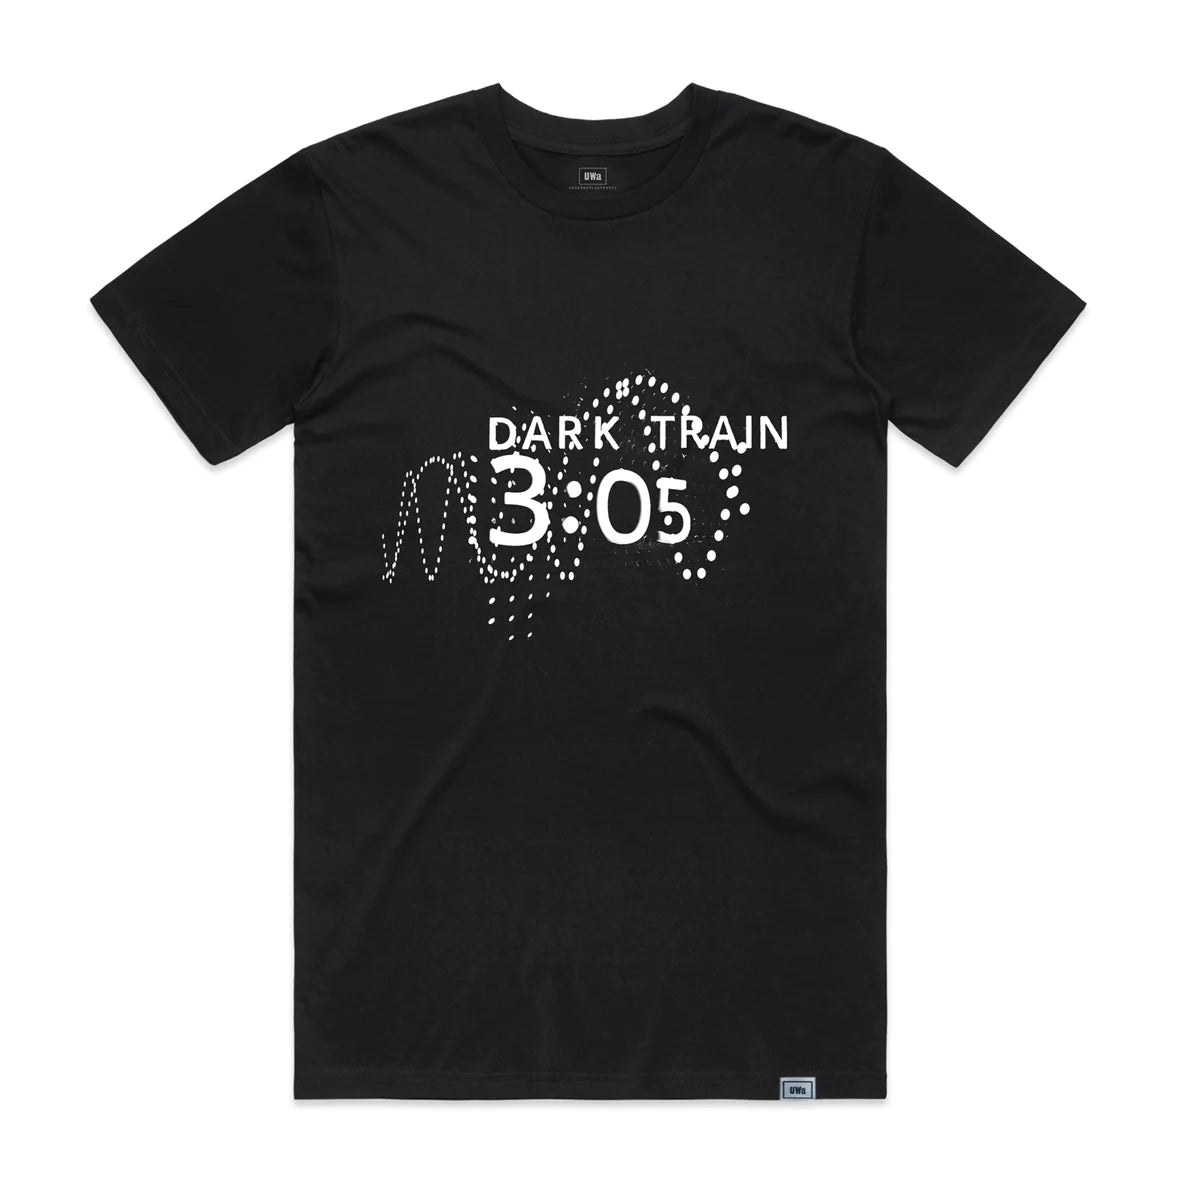 Underworld - *Dark & Long (Dark Train)* 3:05 T-Shirt (Black)